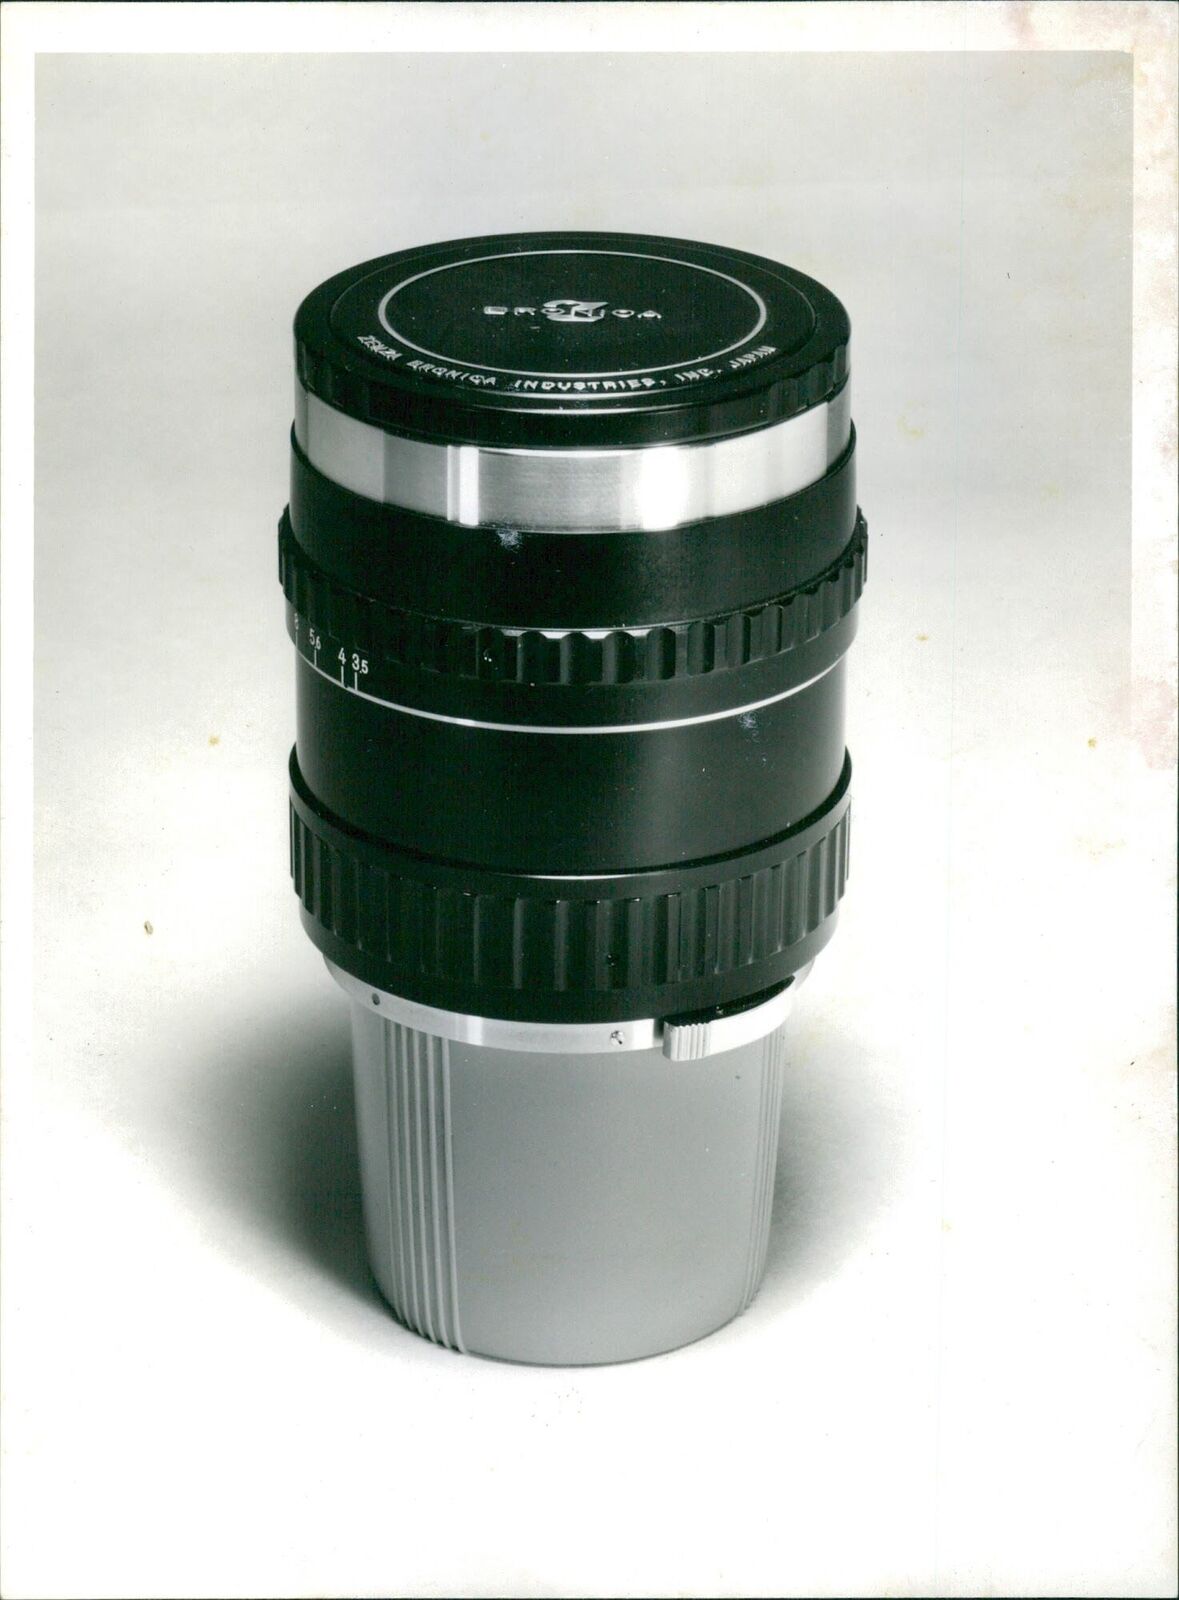 Zenza Bronica camera lens - Vintage Photograph 3306930